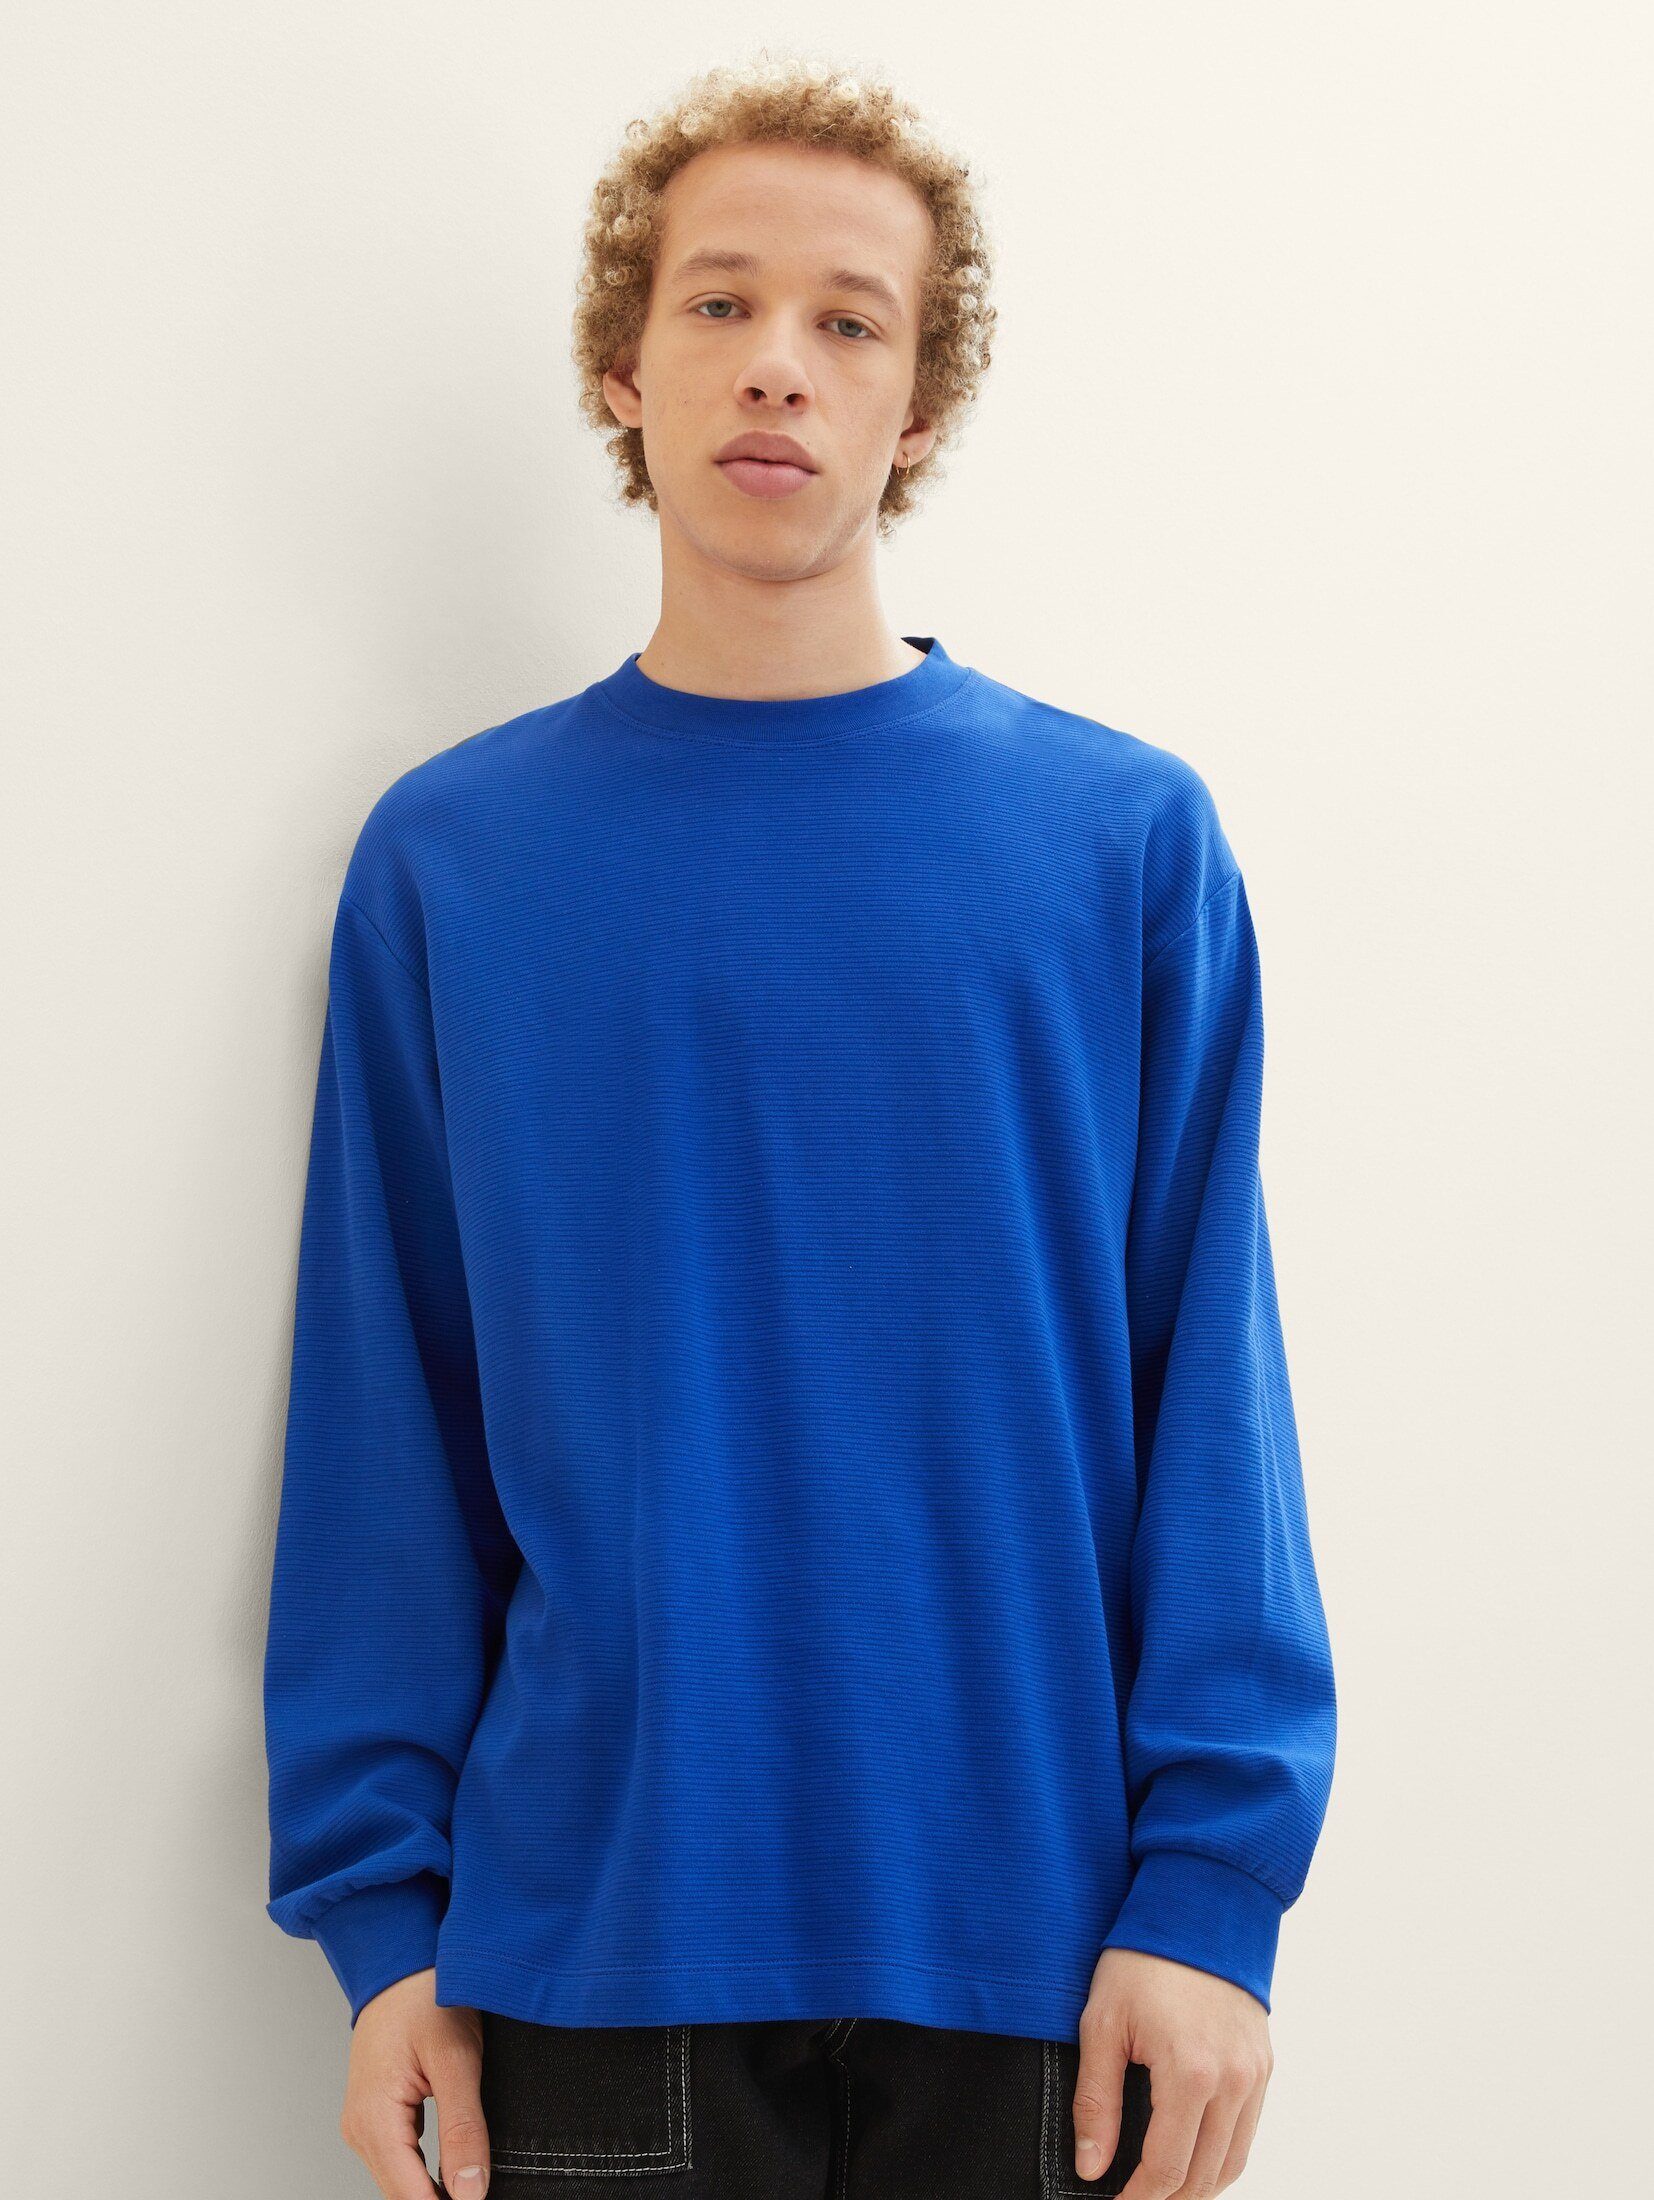 TOM TAILOR Denim T-Shirt Gestreiftes Langarmshirt shiny royal blue